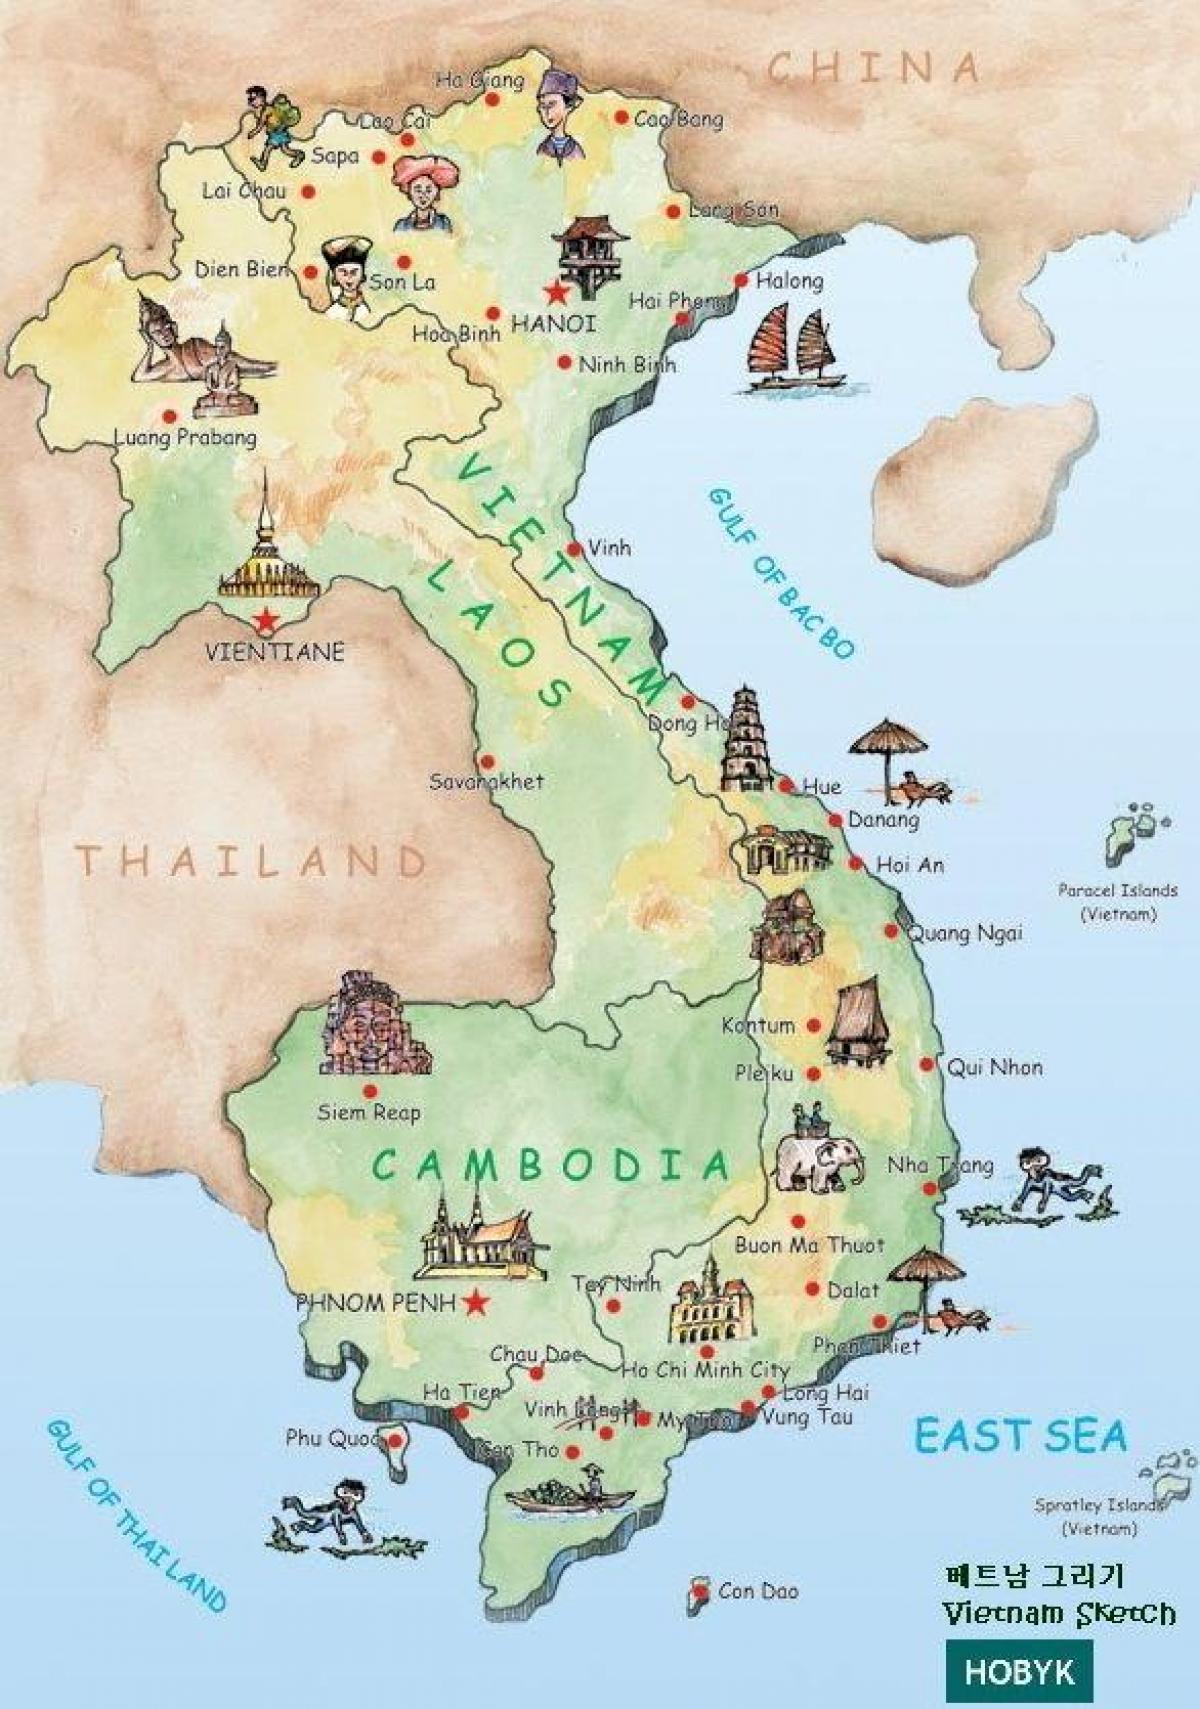 laos trip itinerary